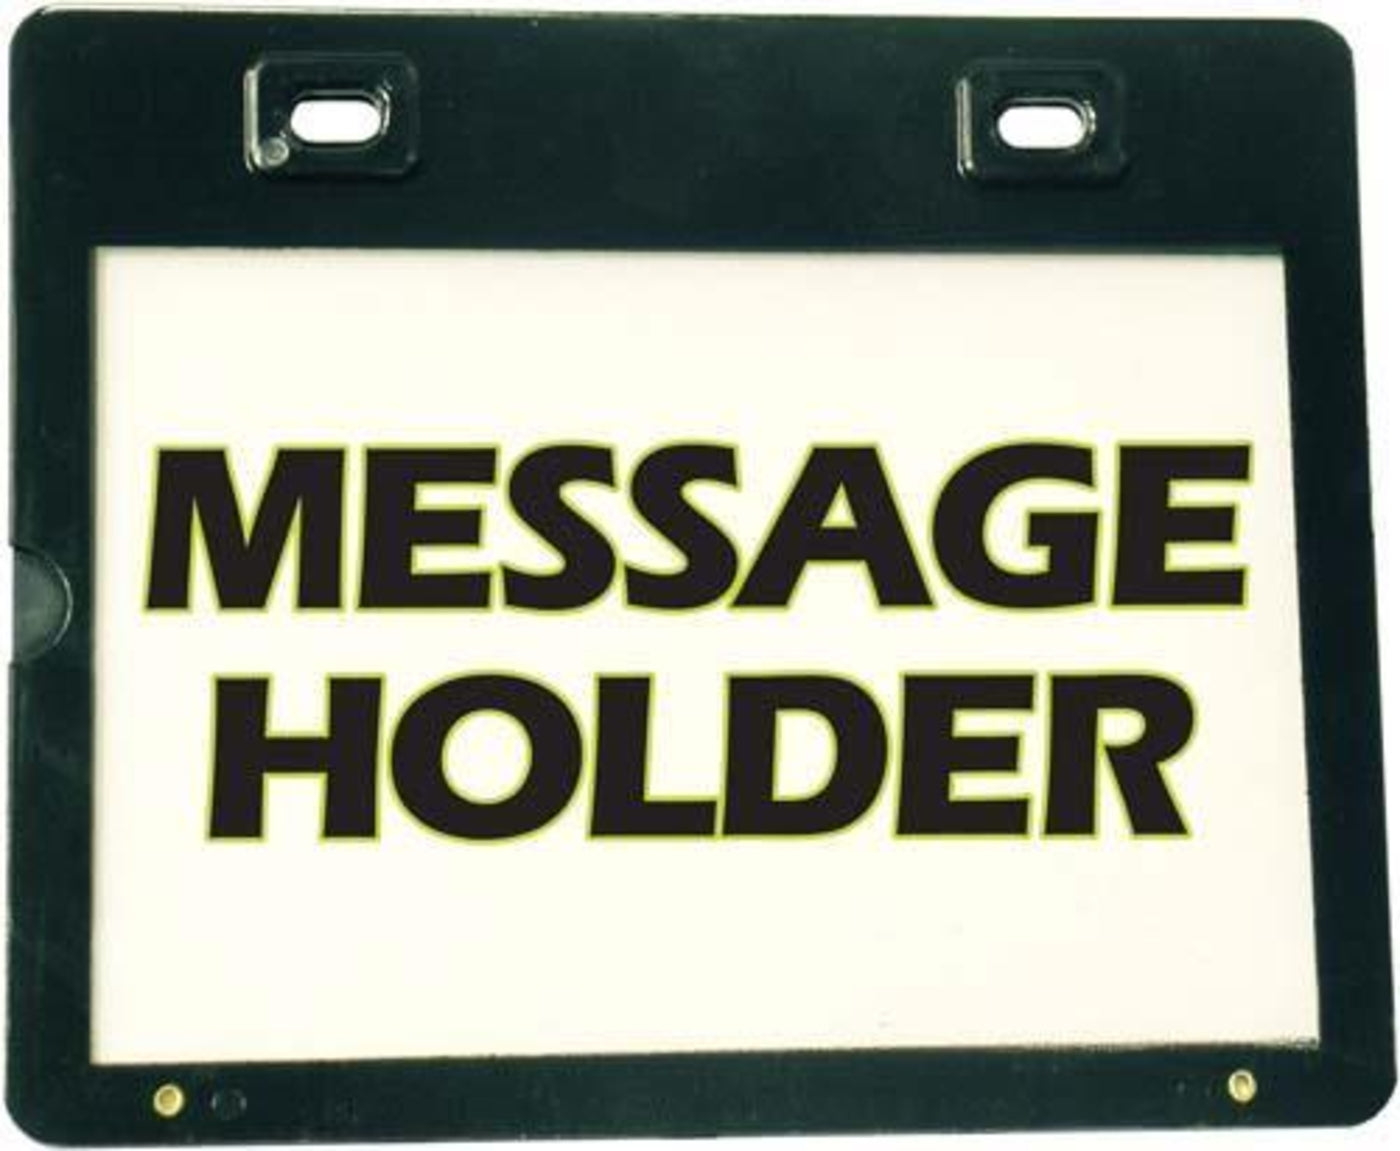 Club Car Message holders